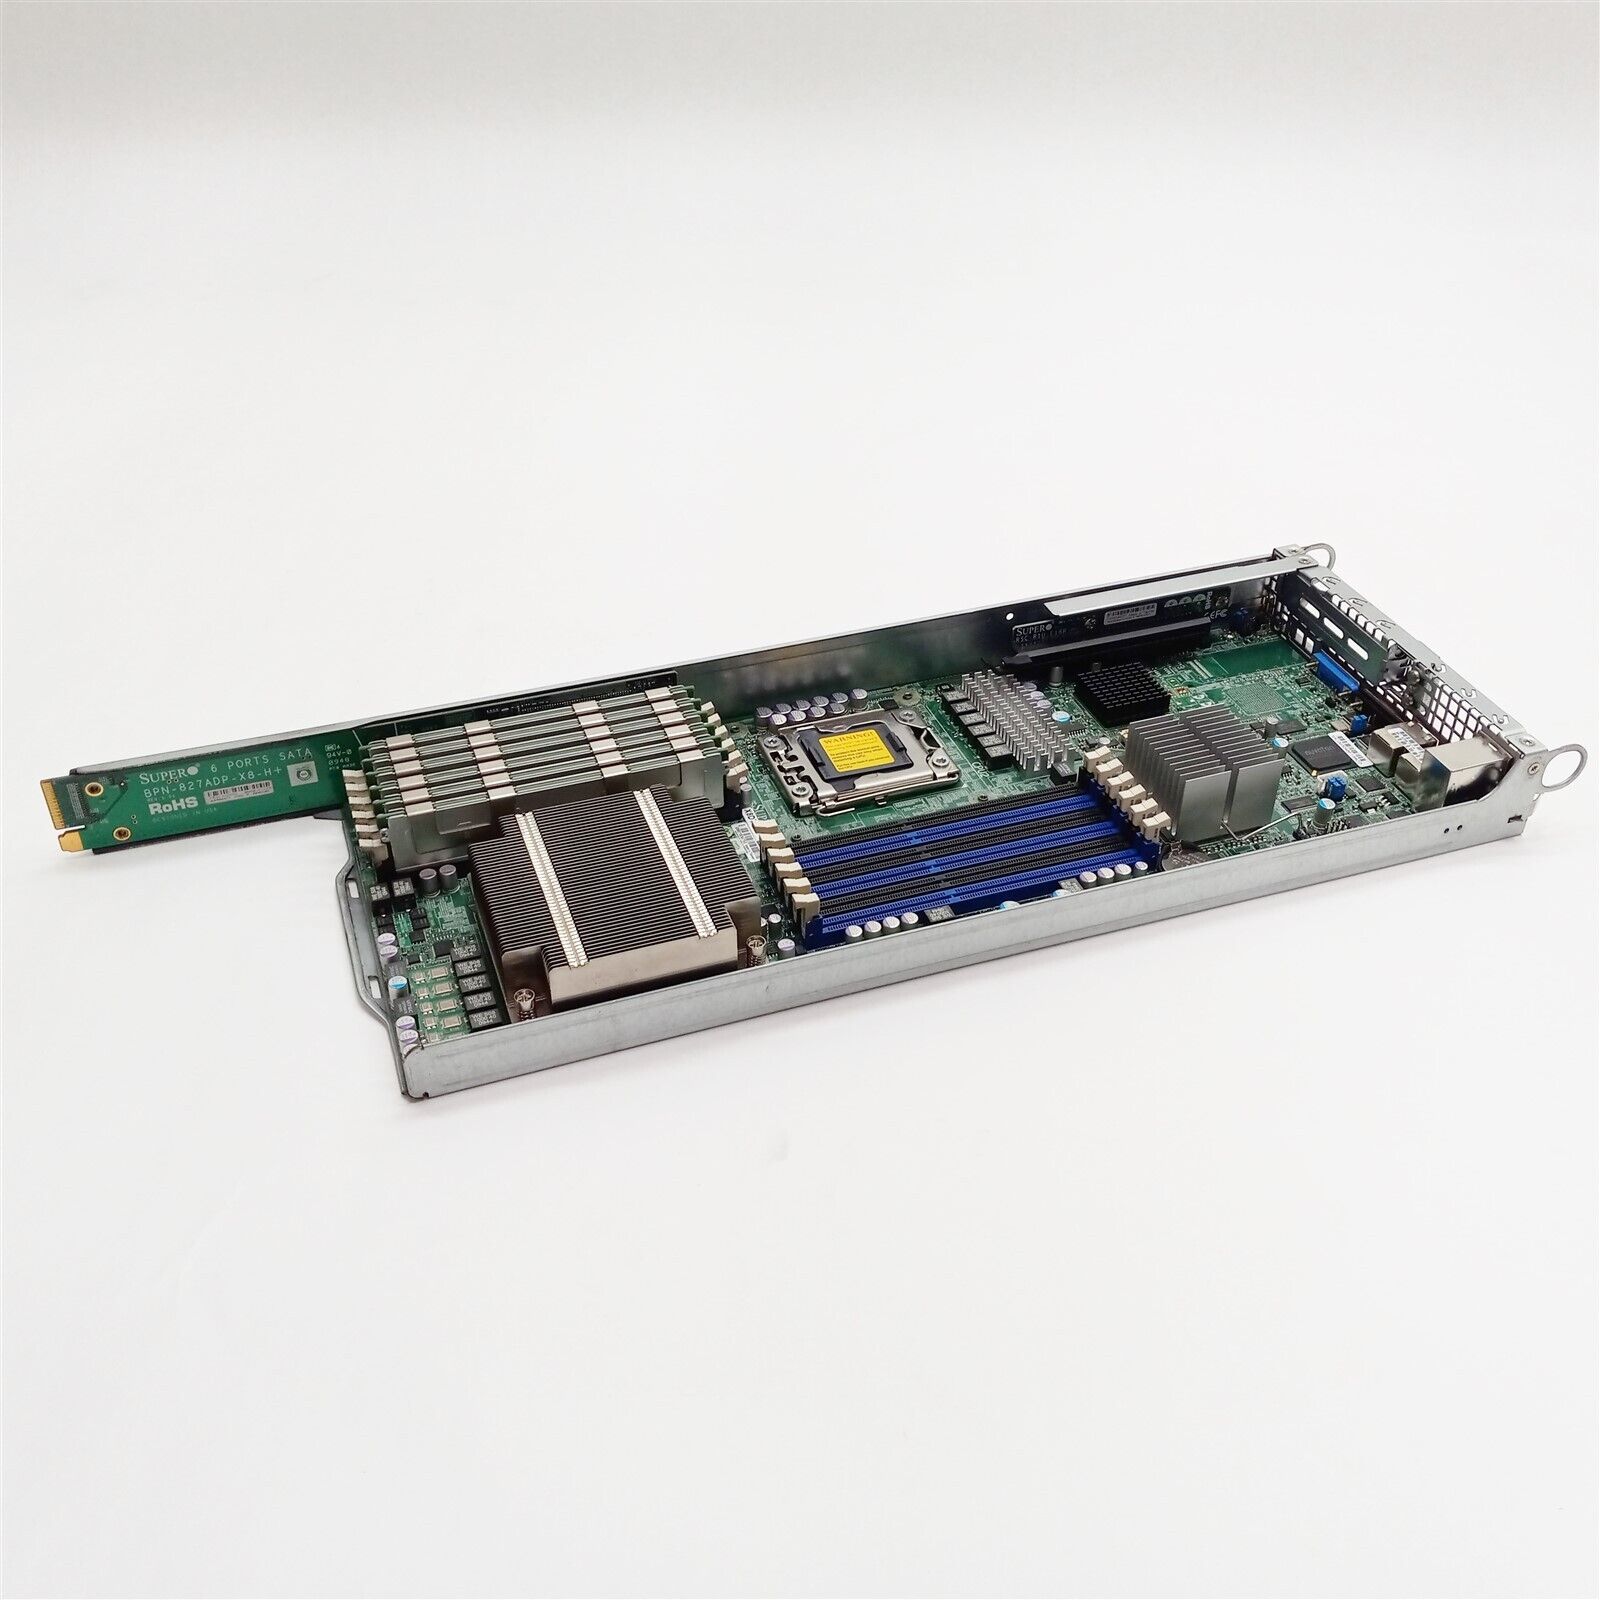 Supermicro X8DTT-HF+ Xeon X5570 Quad-Core 2.93GHz 24GB Server Board Blade Node